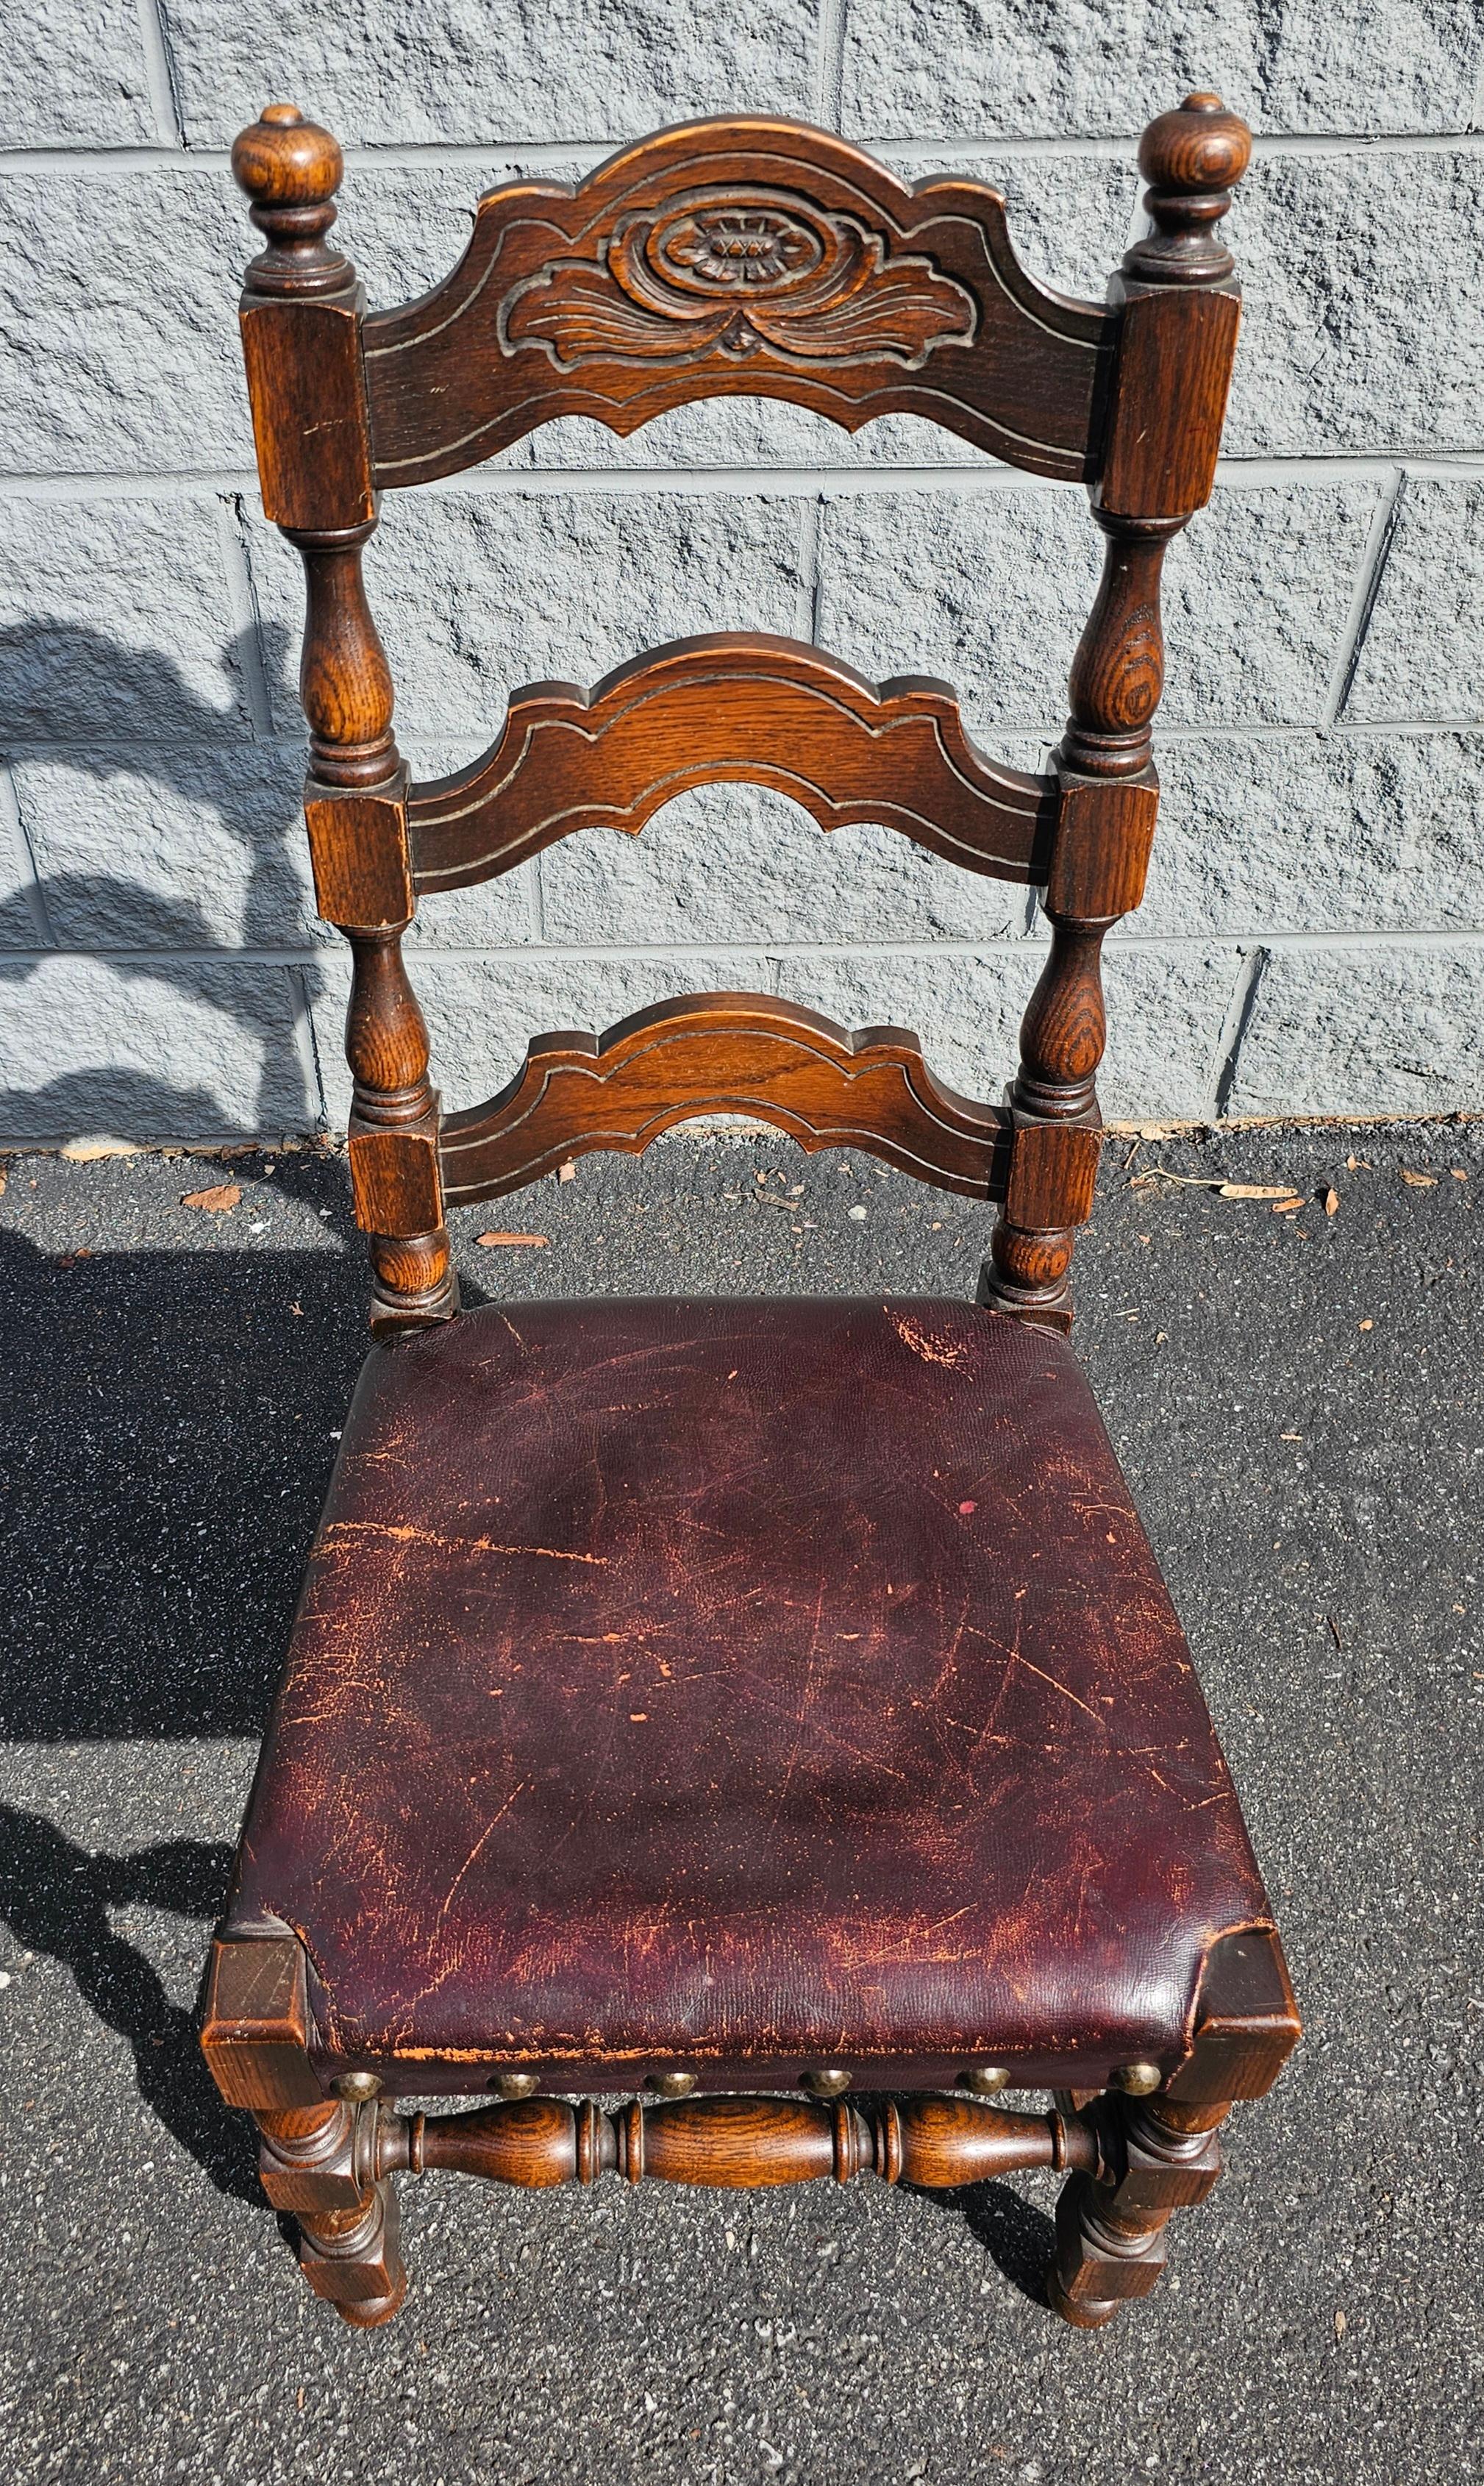 Beistellstuhl aus gepolsterter Eiche im Jacobean-Revival-Stil aus Leder, 19.-20. Jahrhundert (Jakobinisch) im Angebot